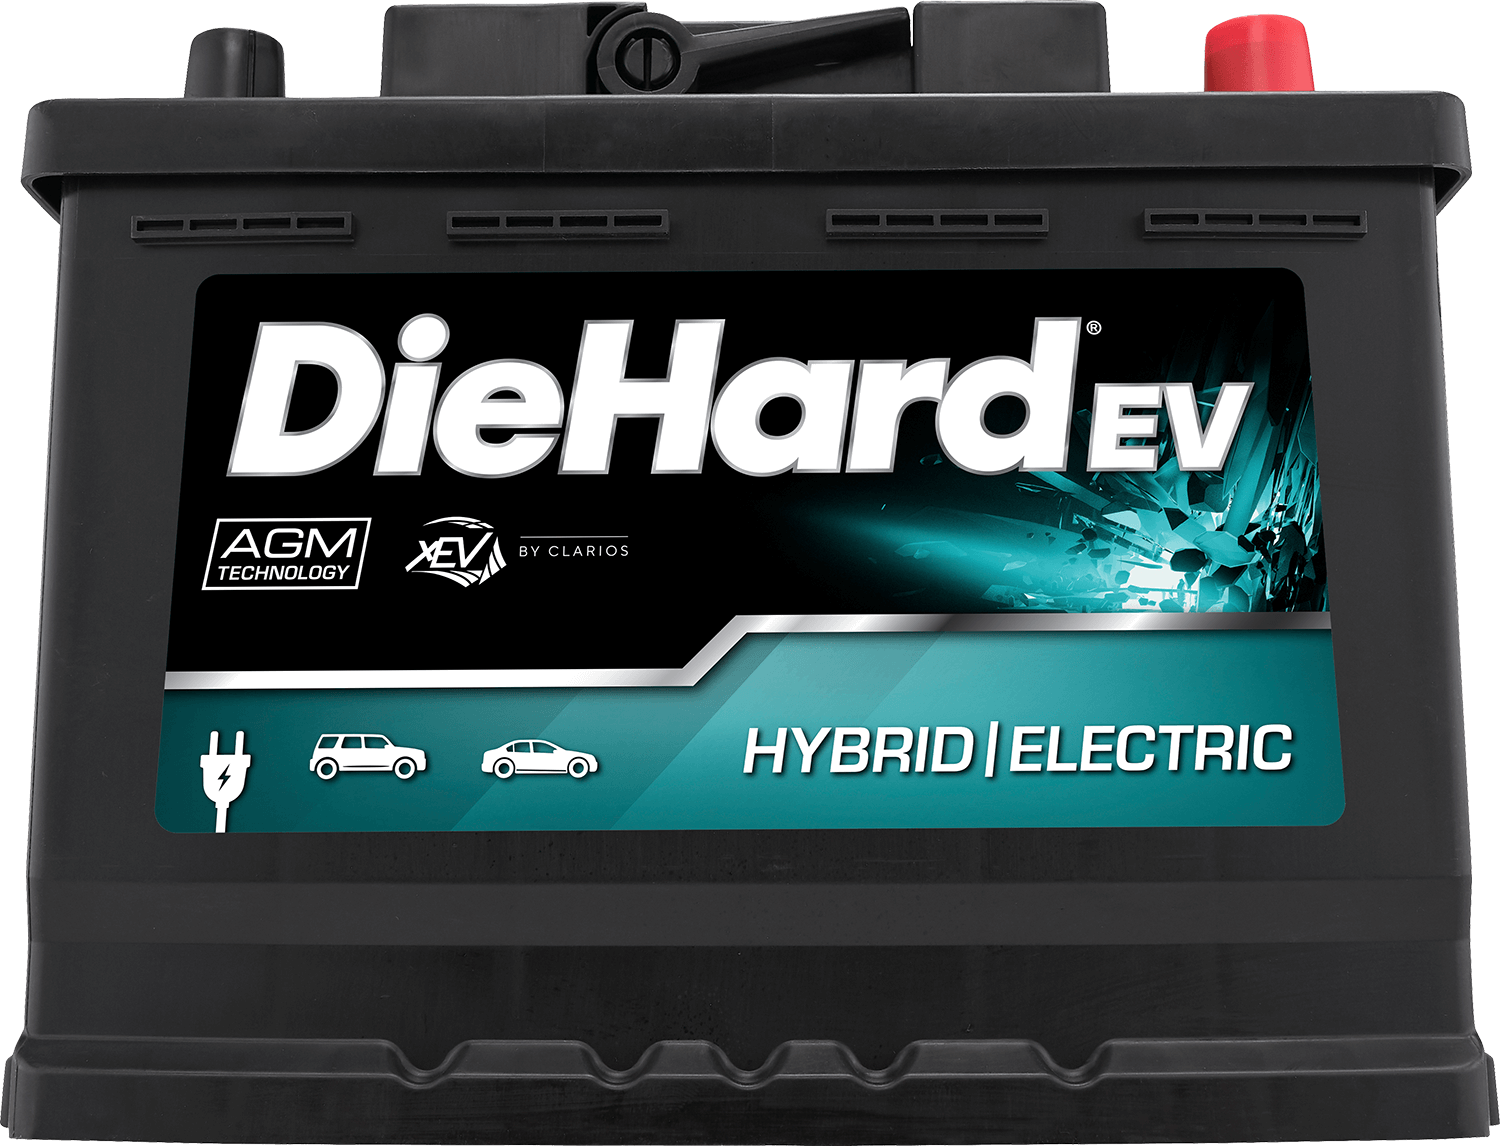 DieHard Platnium Battery